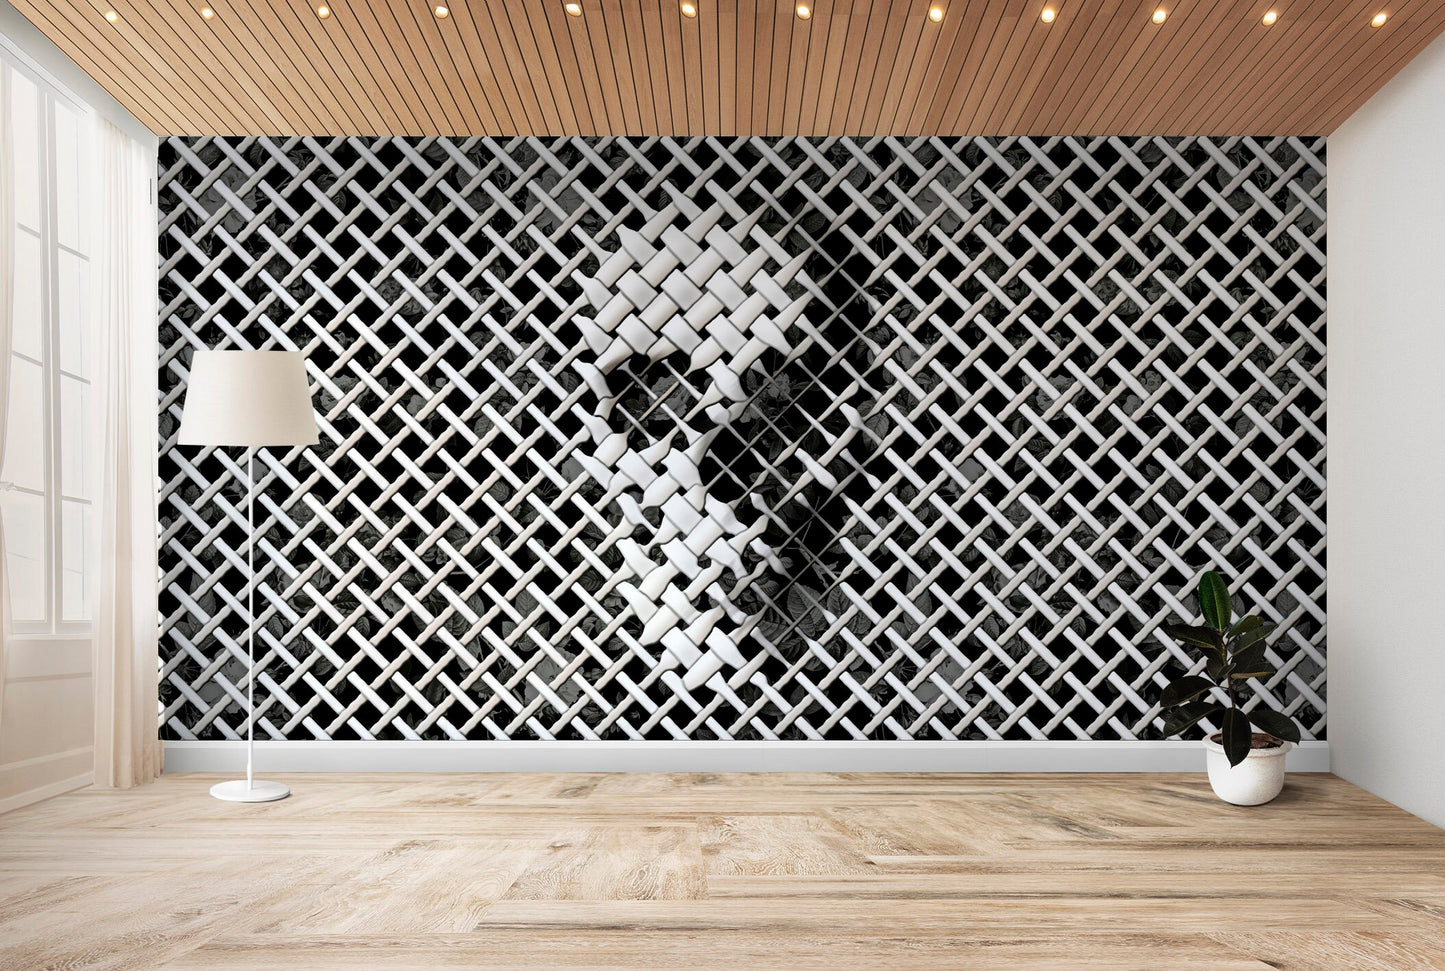 Wicker Skull Wallpaper Home Decor, 3D Effect Black And White Skull Art Traditional Wallpaper, Gothic Wall Mural Sugar Skull Print Wall Art